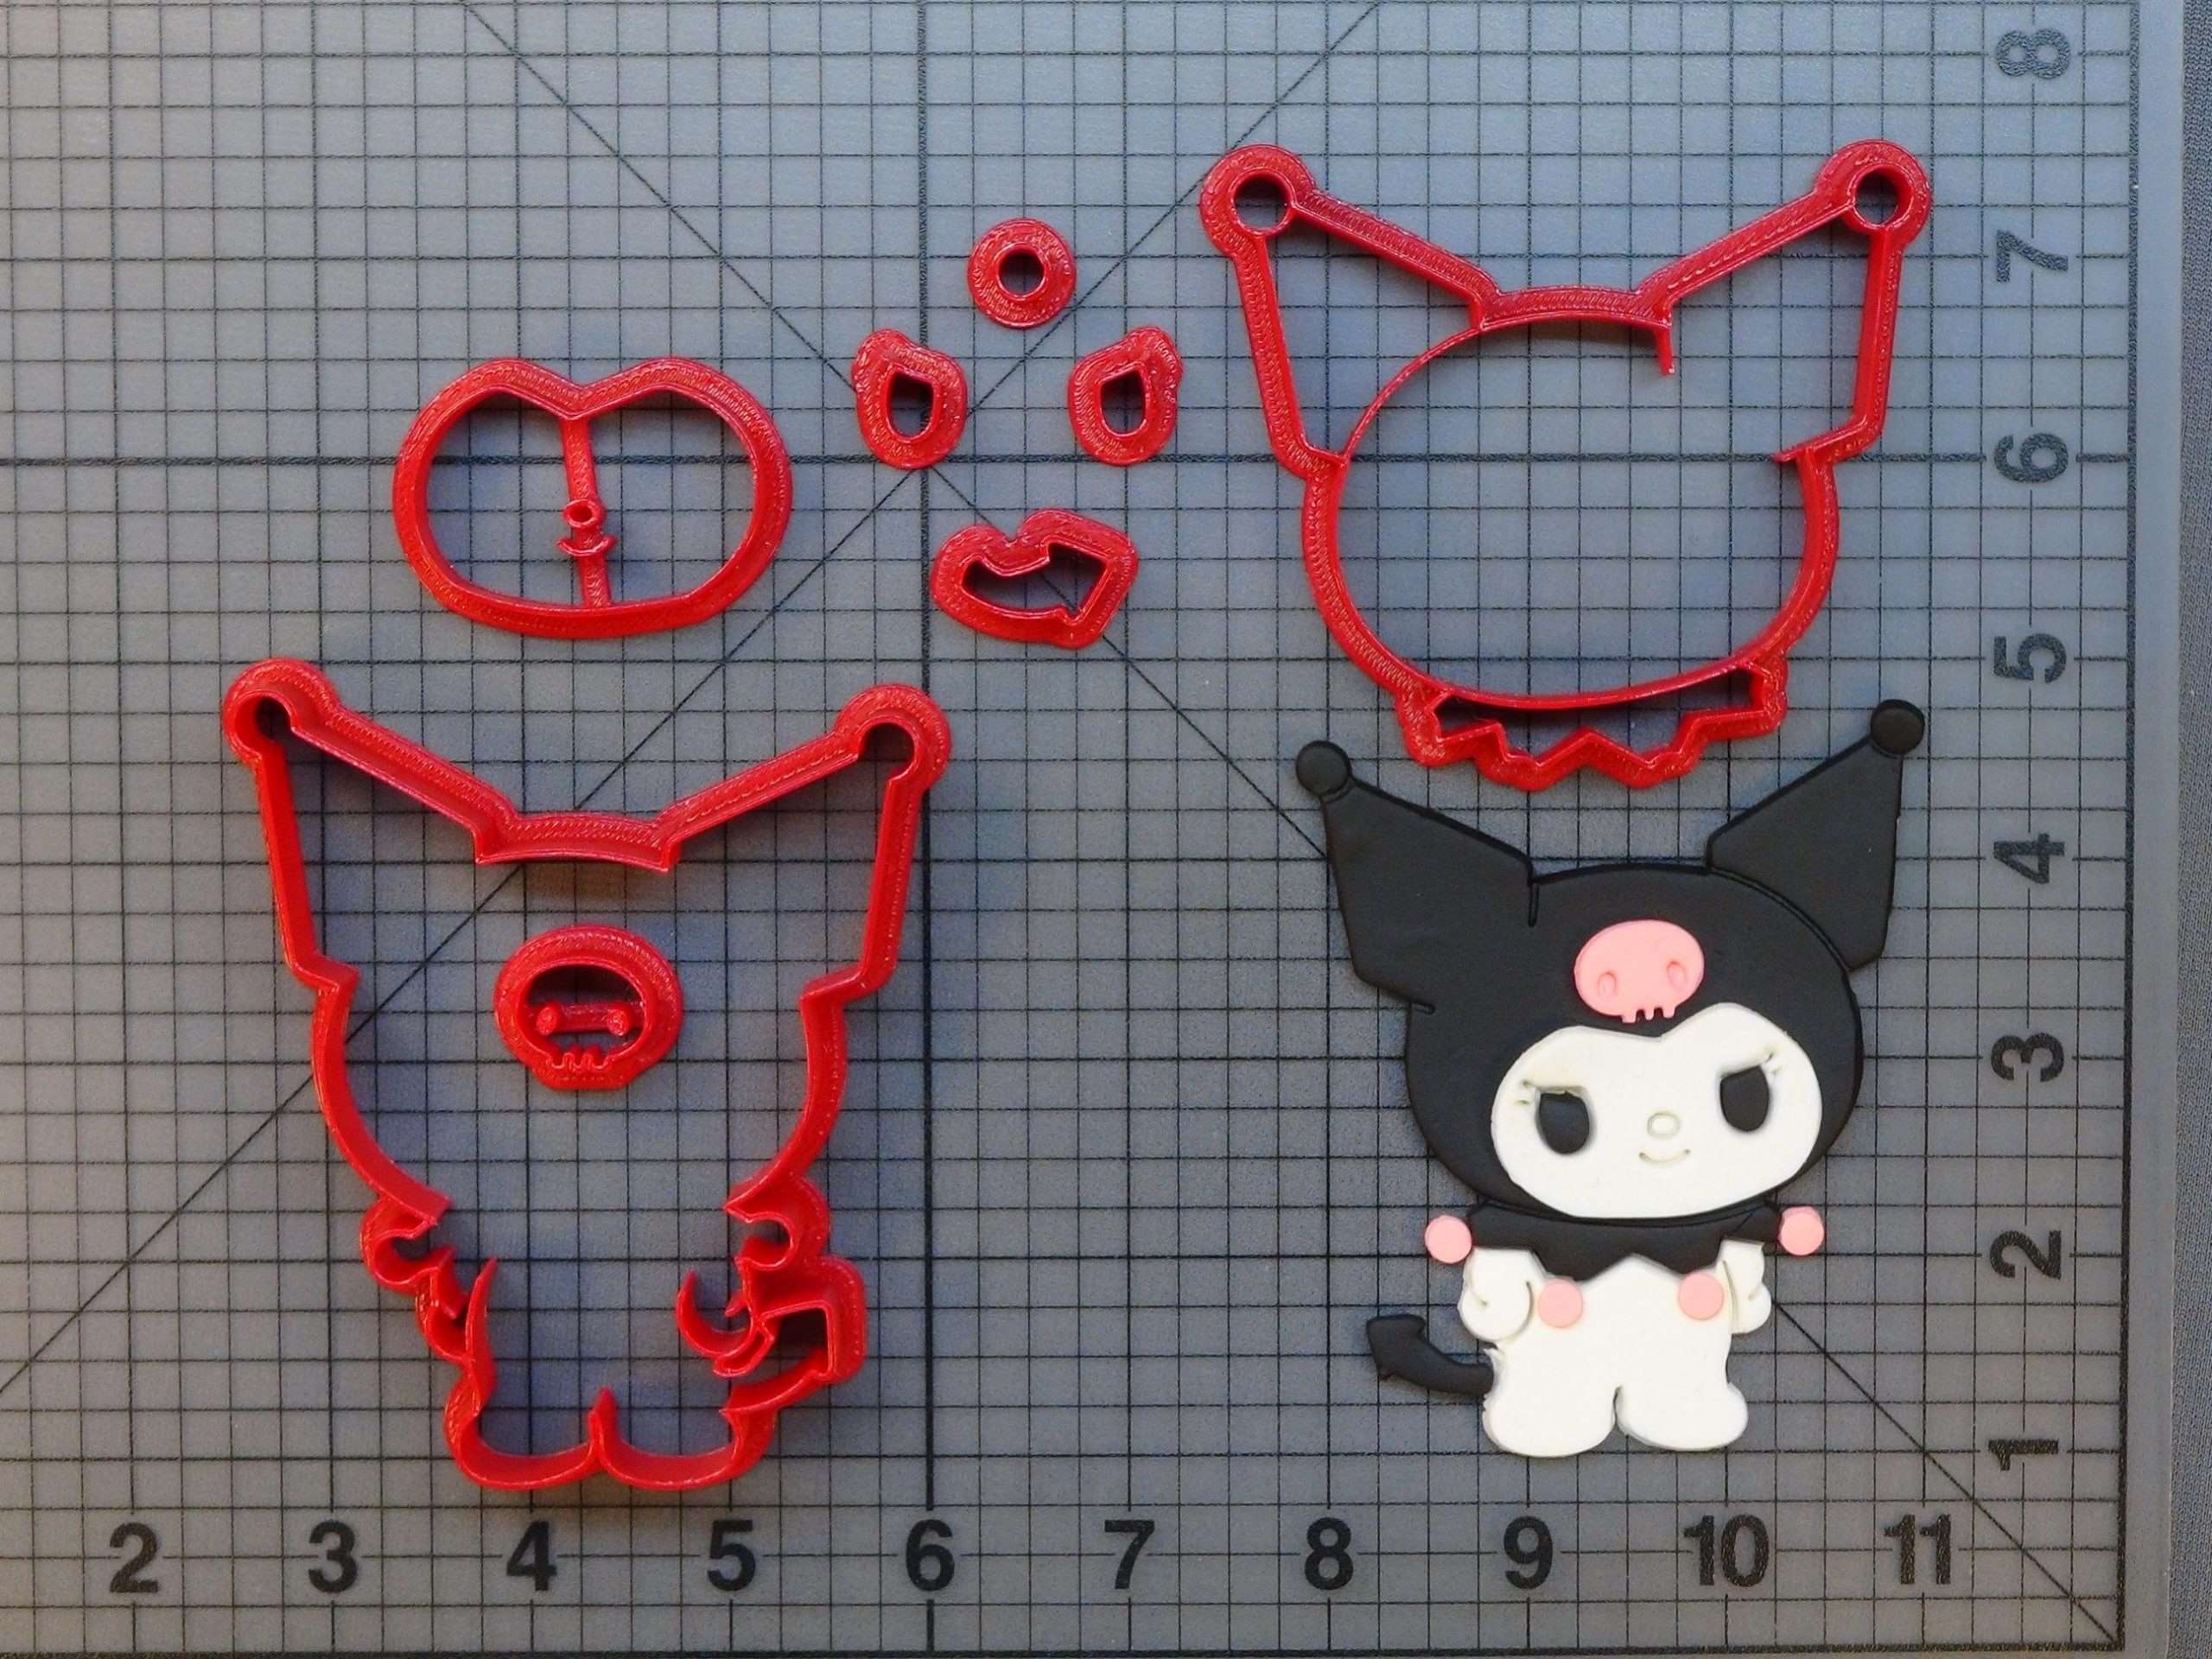 https://www.jbcookiecutters.com/wp-content/uploads/2018/12/JB_Sanrio-Kuromi-266-704-Cookie-Cutter-Set-Toy-Character-266-704-scaled.jpg